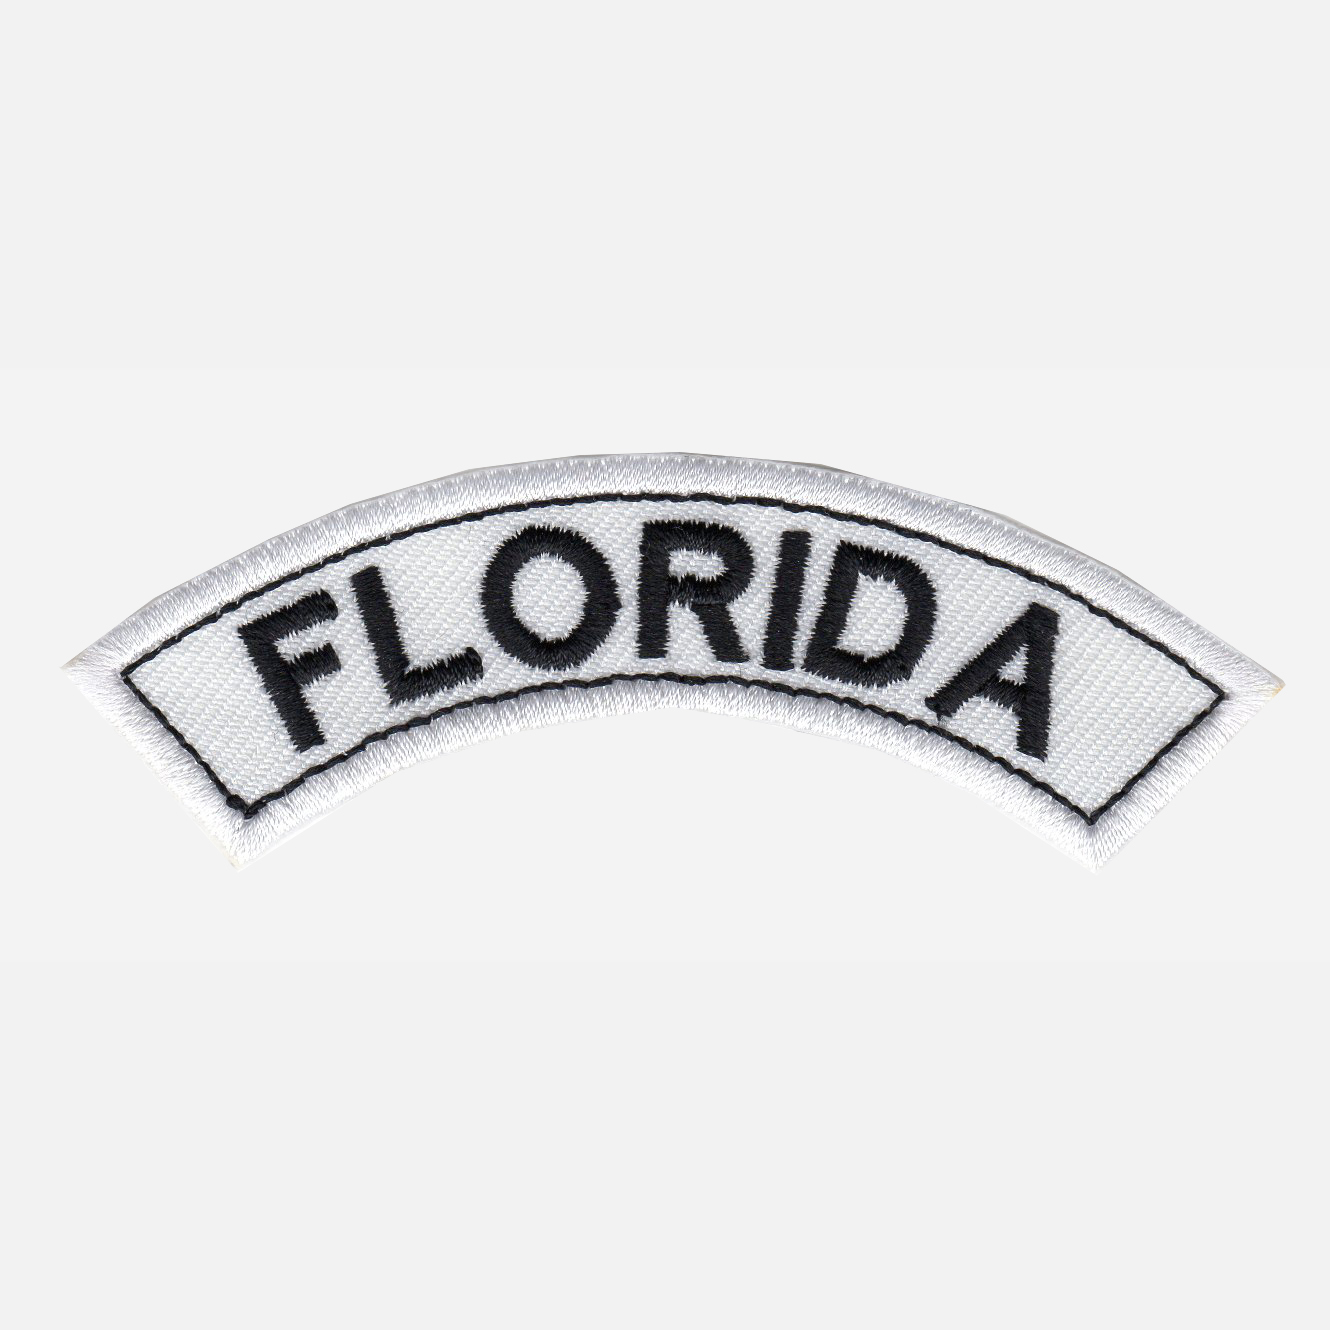 Florida Mini Top Rocker Embroidered Vest Patch